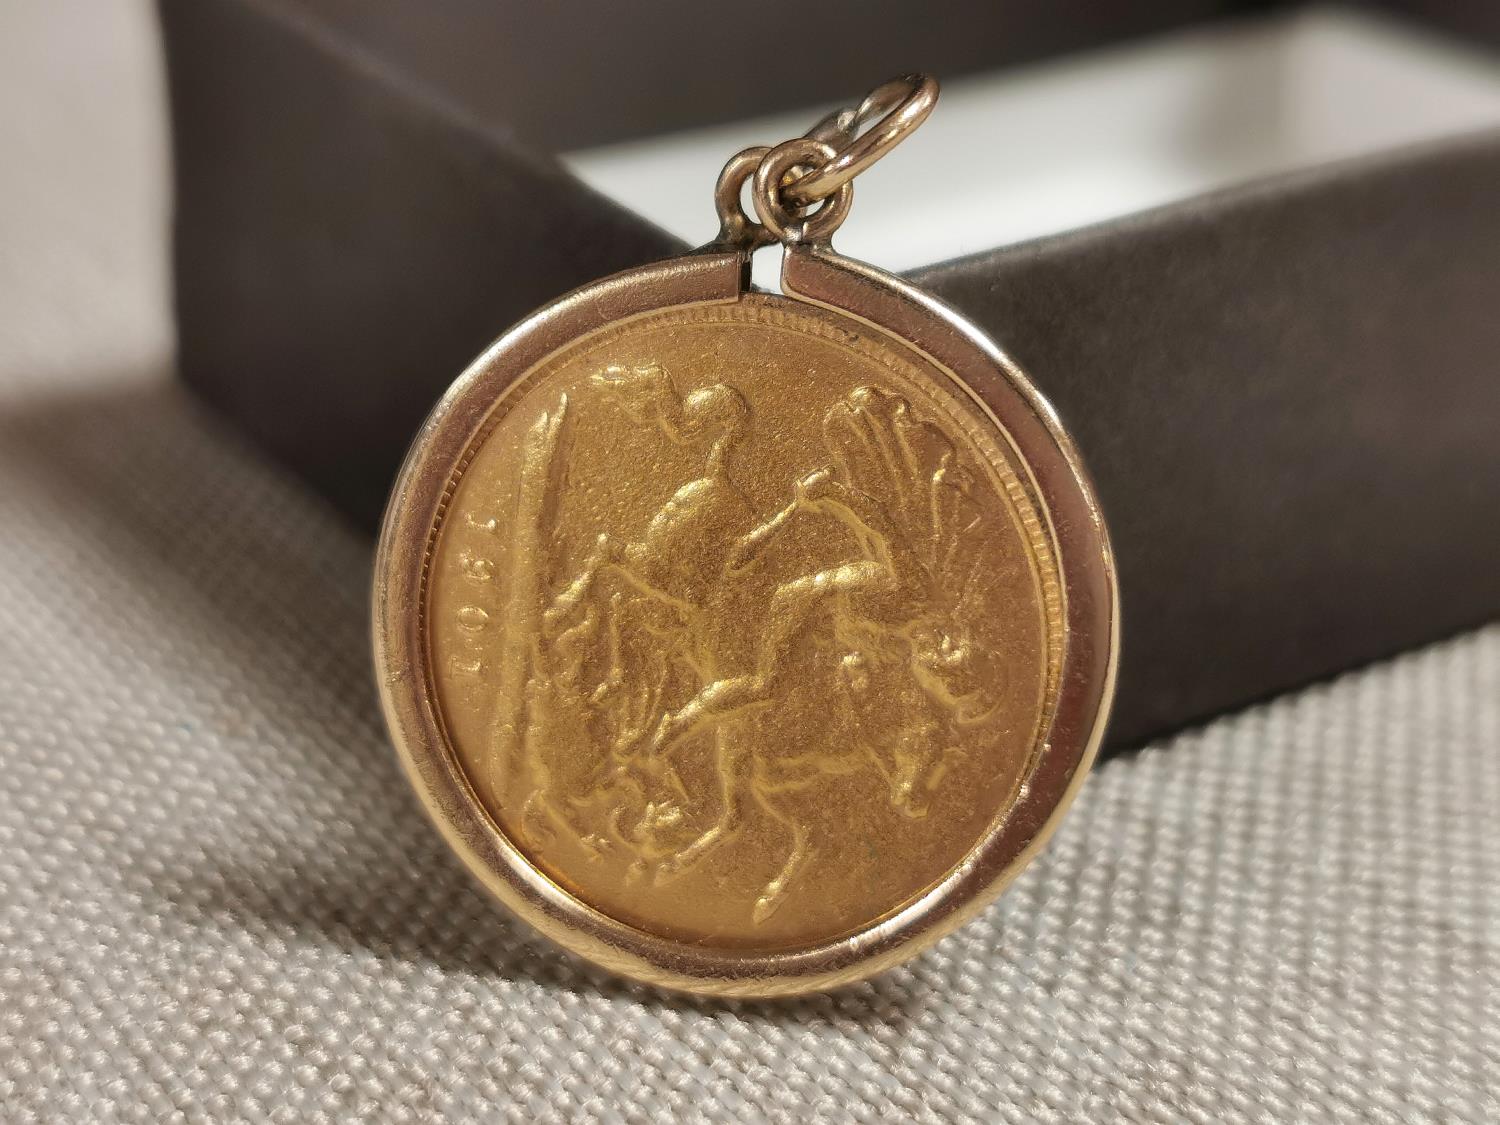 1901 Half Sovereign Gold Coin & Mount - 5g weight